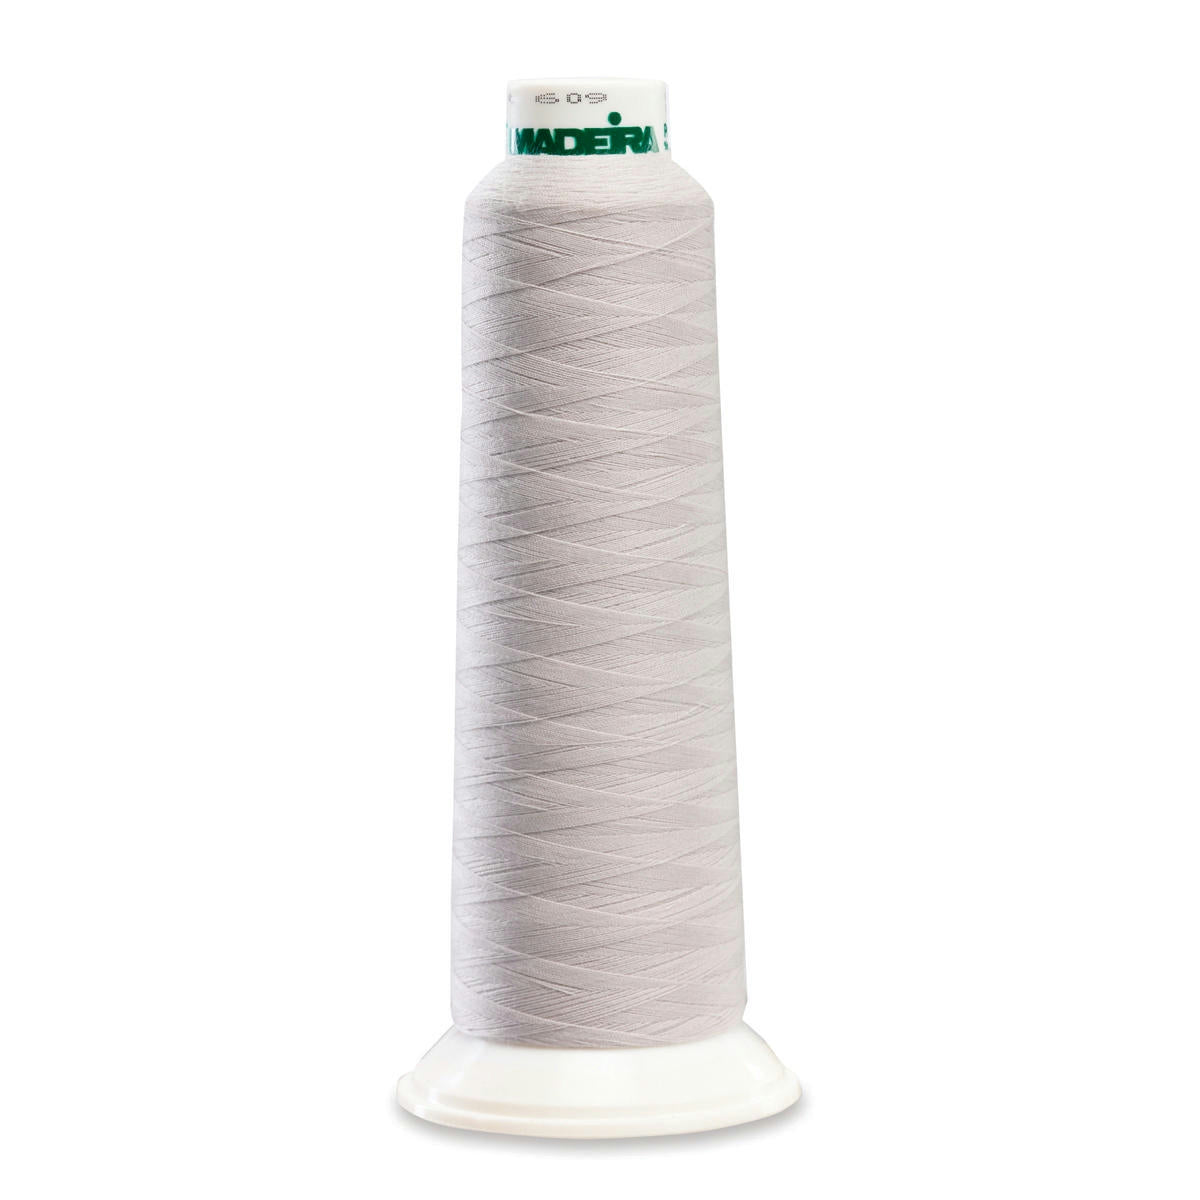 Silver Color, Aerolock Premium Serger Thread, Ref. 8686 by Madeira®